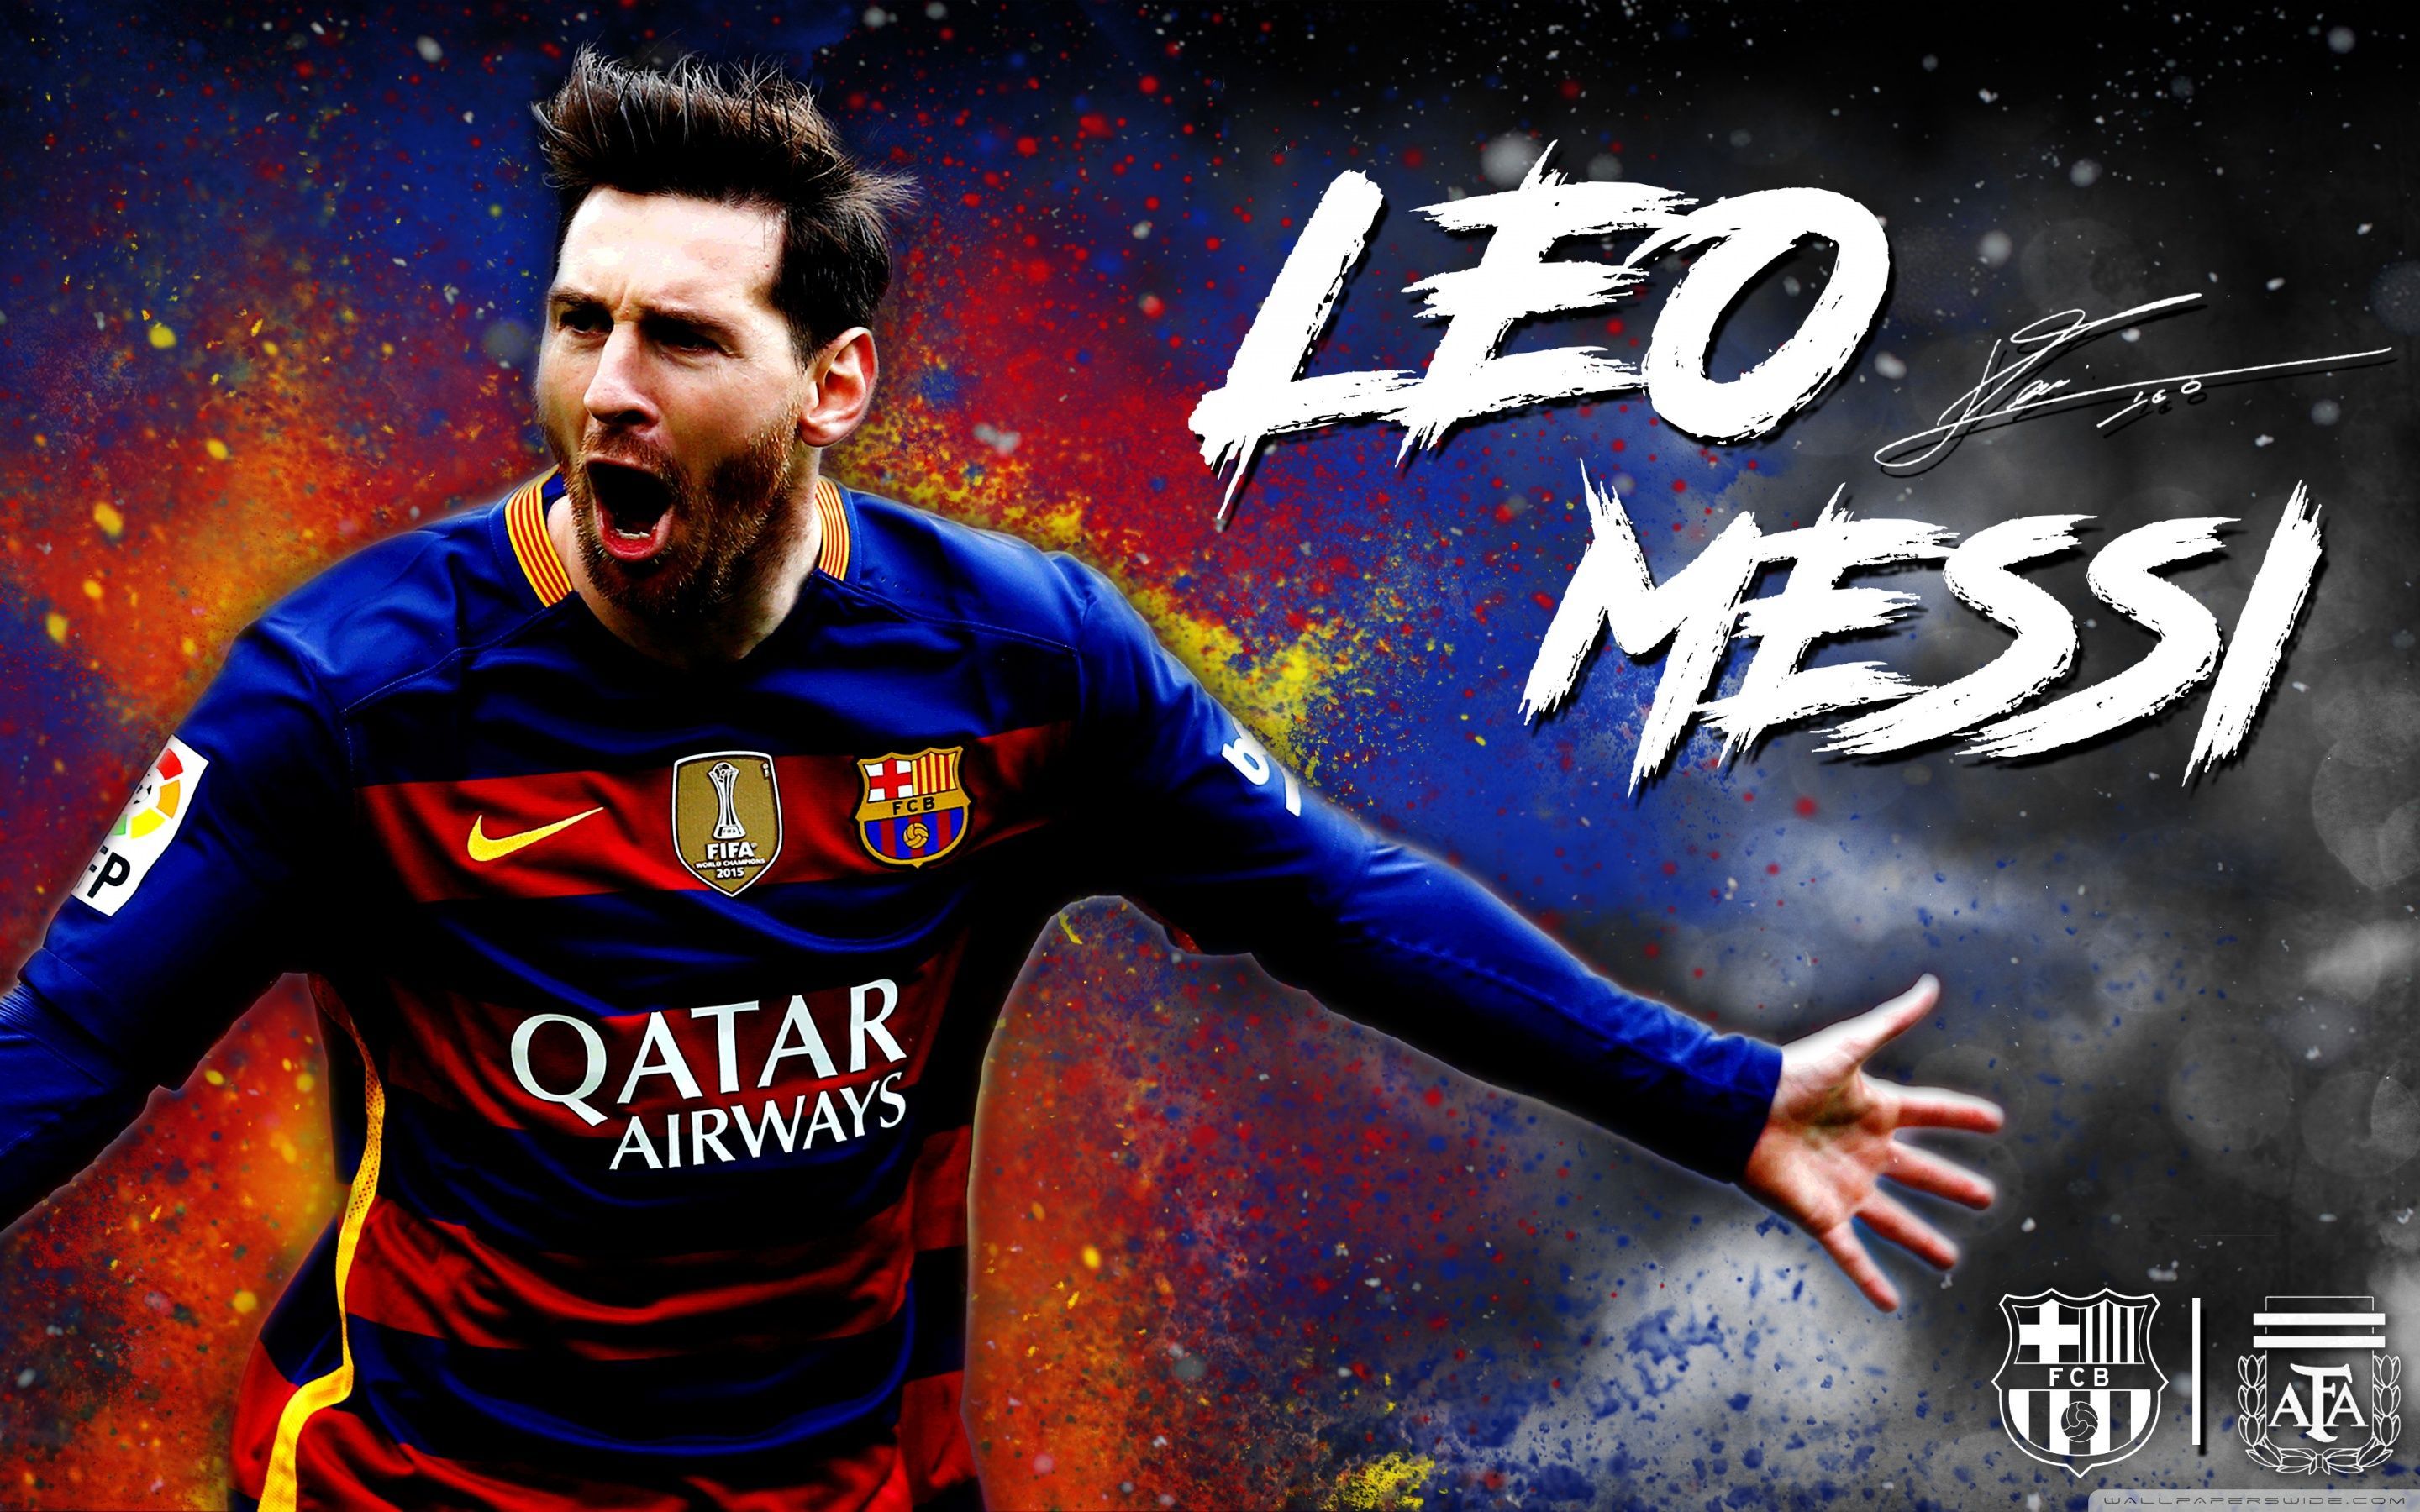 Messi Barcelona Wallpapers on WallpaperDog